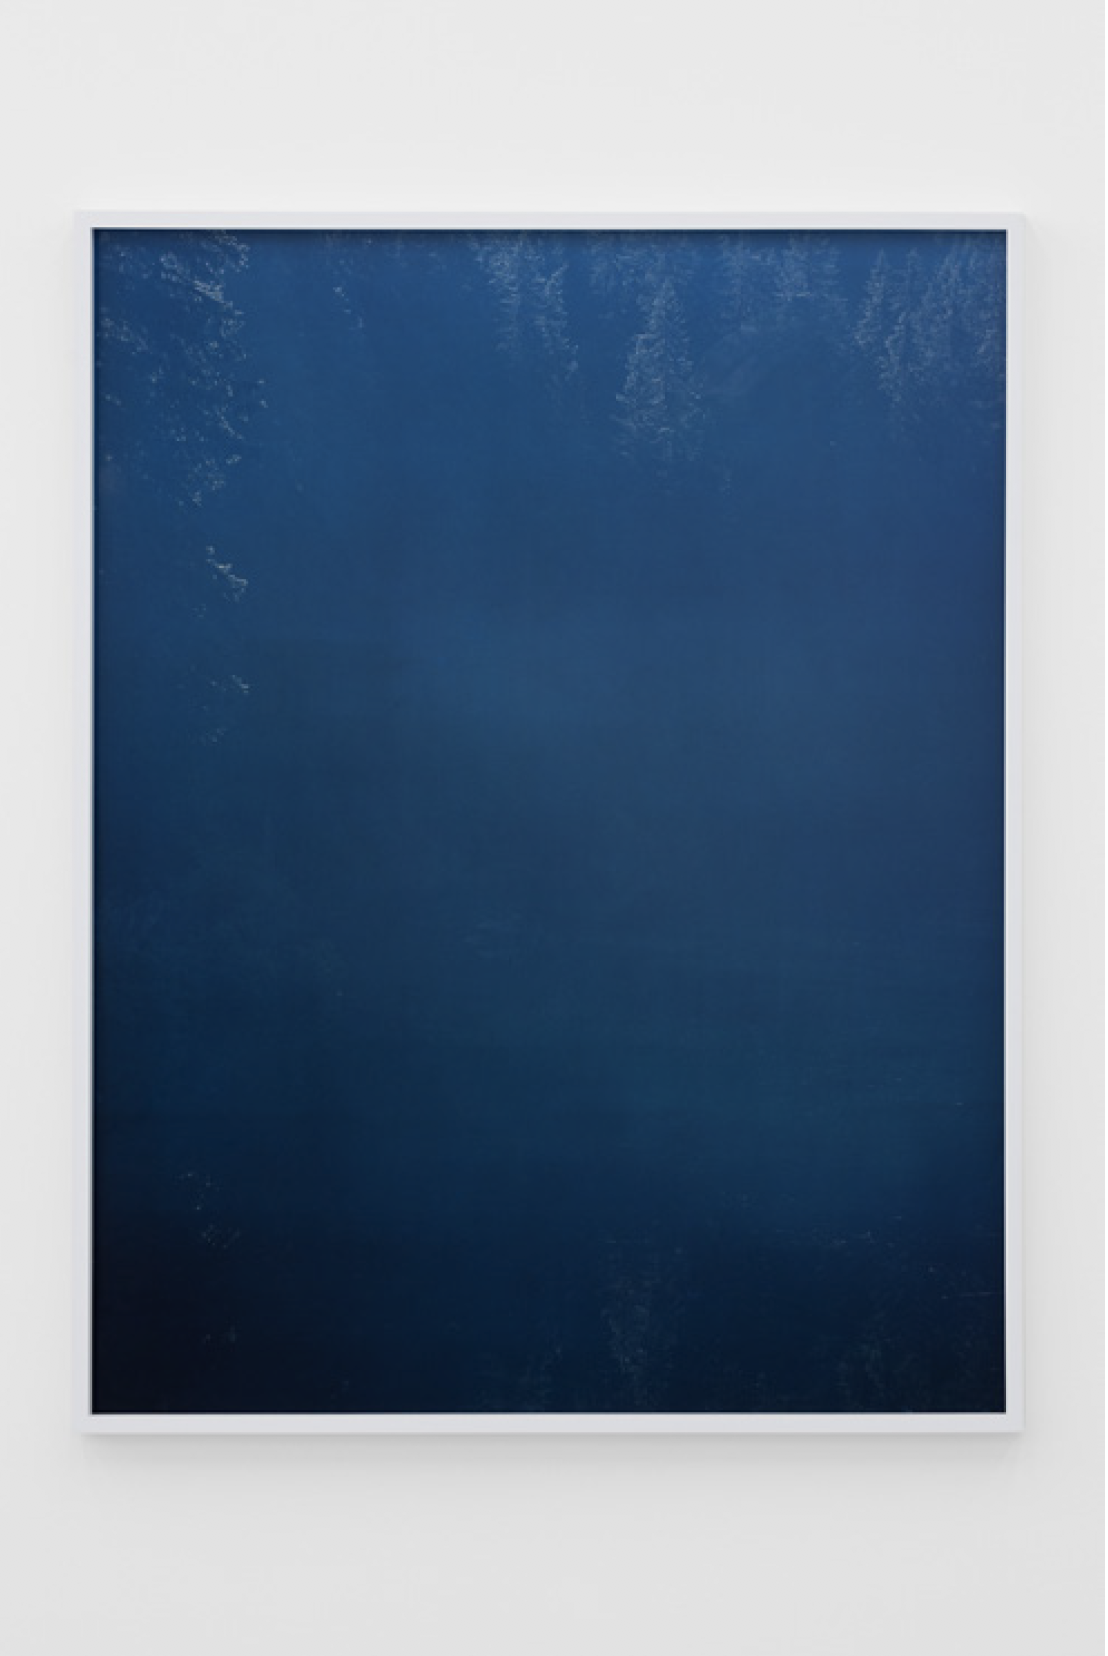 Daniel Gustav Cramer, Early morning at Lago di Carezza, 2017. C-print, framed. 140.5 × 113 cm
